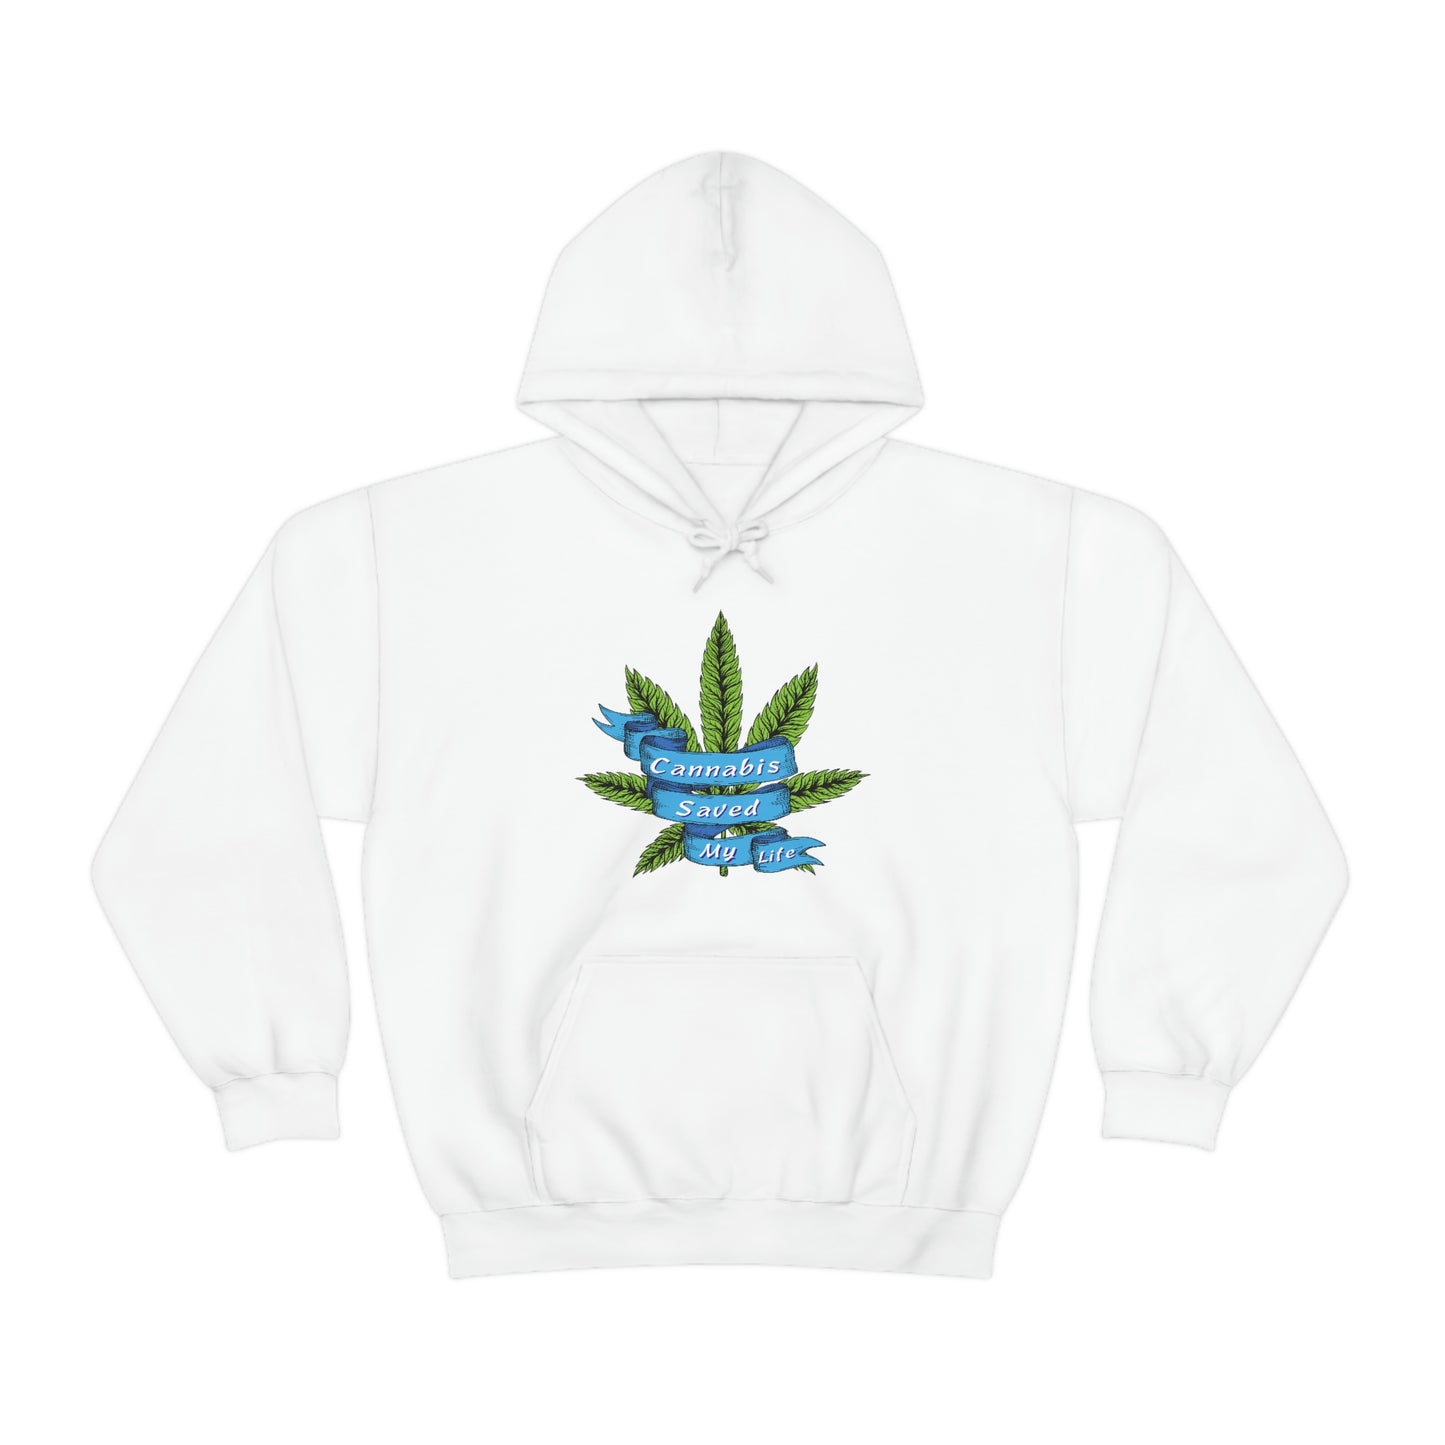 a white Cannabis Saved My Life Cannabis Hoodie with a marijuana leaf on it.